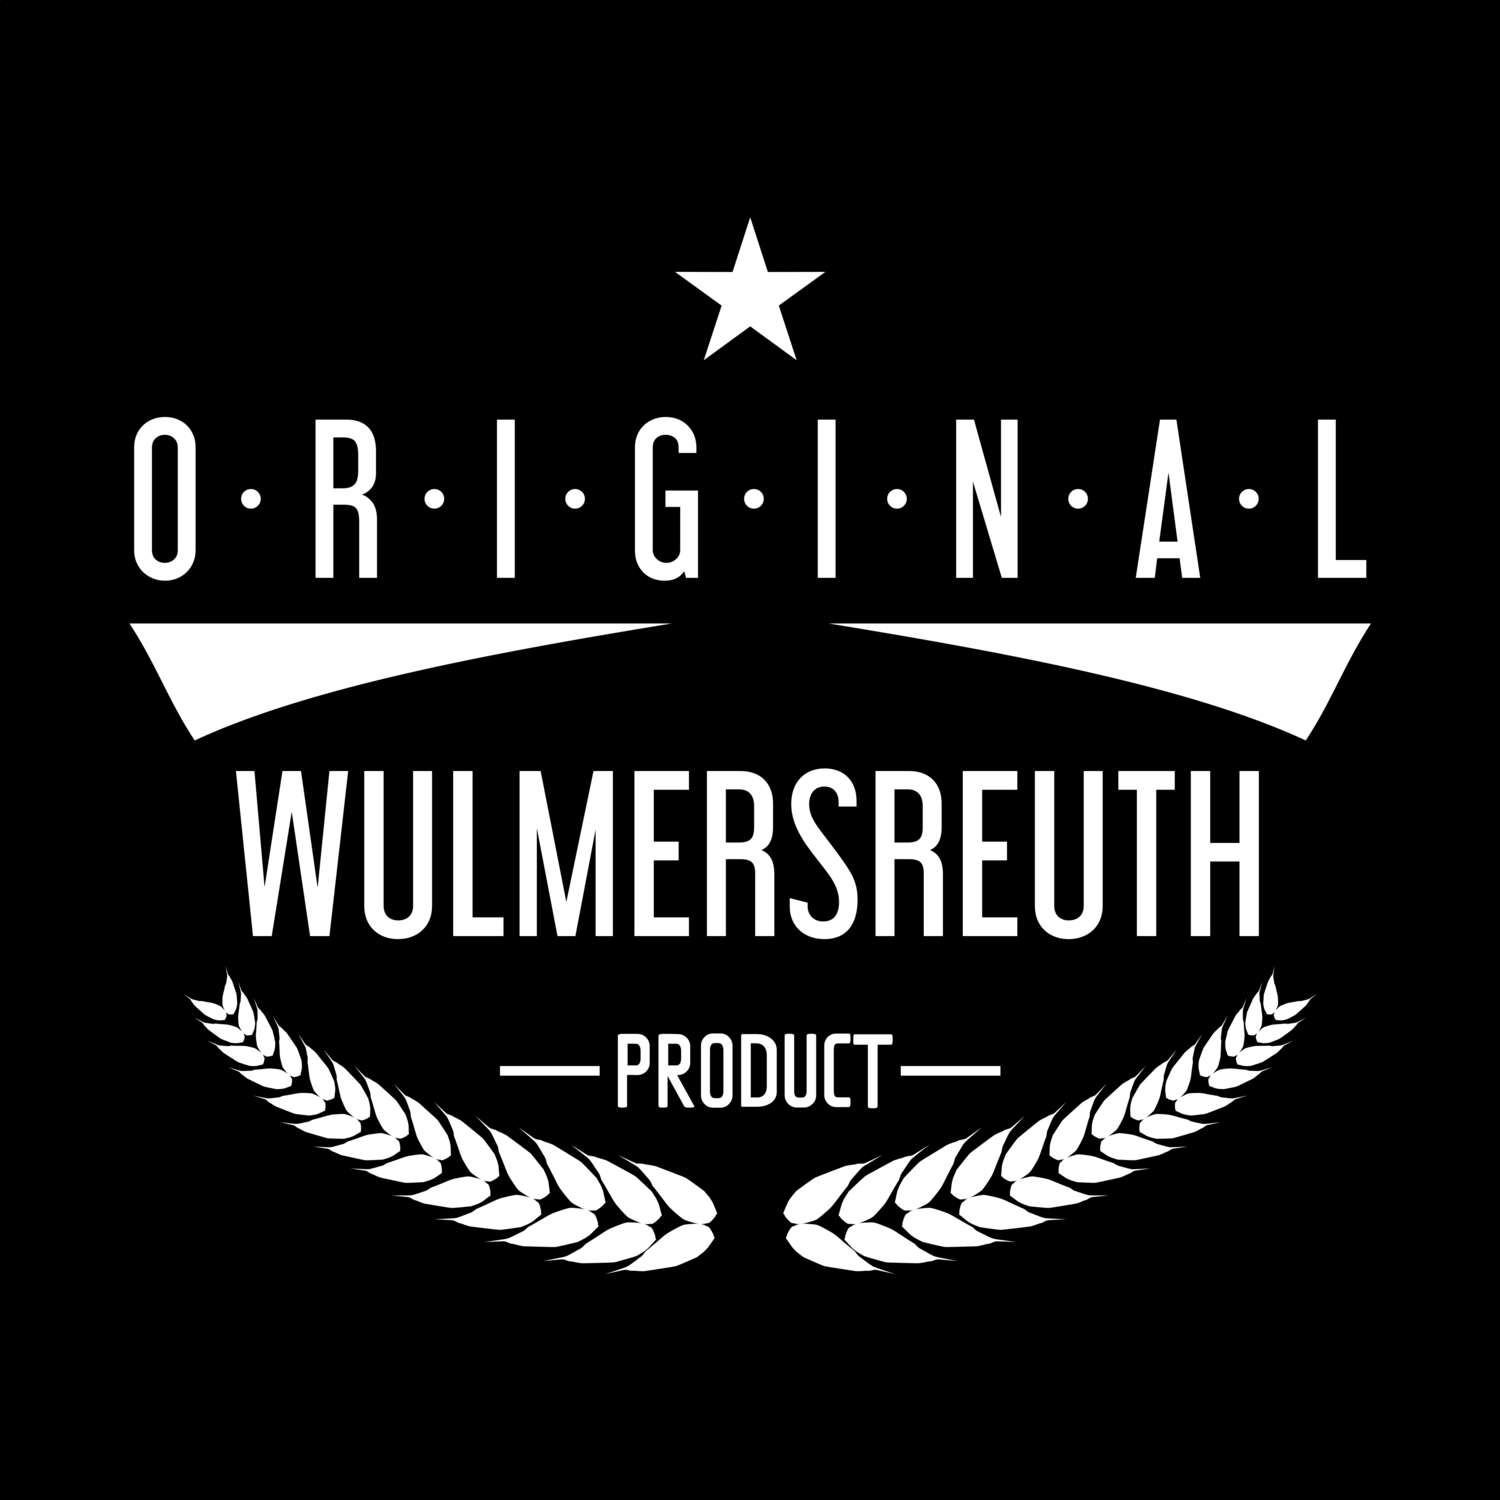 Wulmersreuth T-Shirt »Original Product«